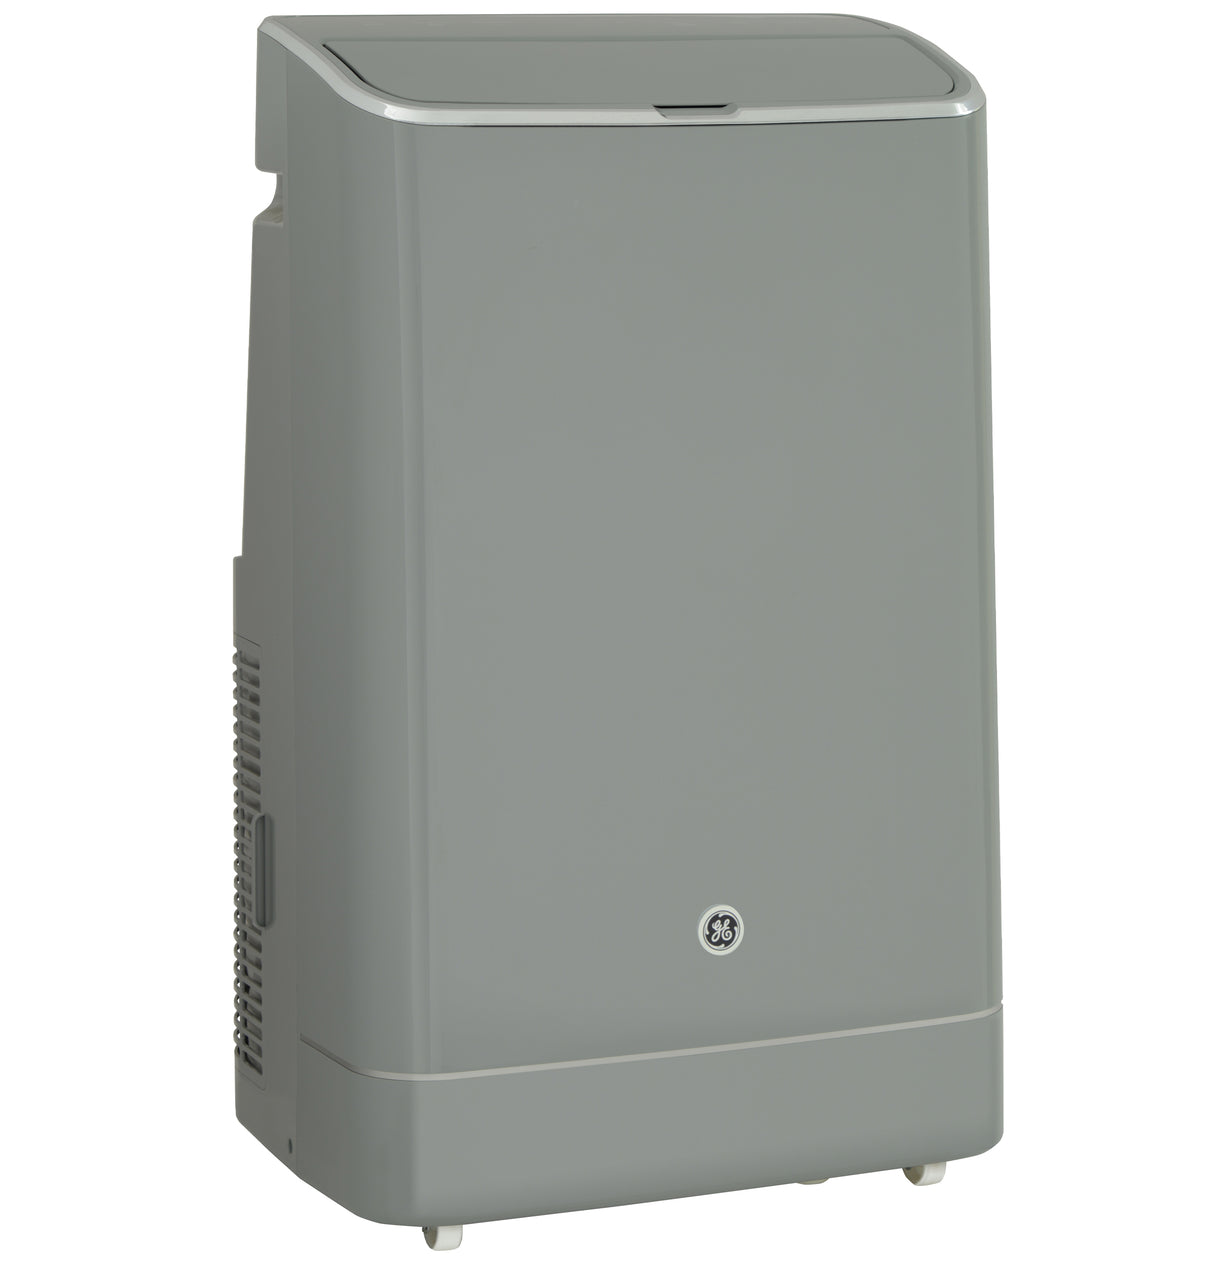 GE(R) 10,500 BTU Portable Air Conditioner with Dehumidifier and Remote, Grey - (APCD10JASG)